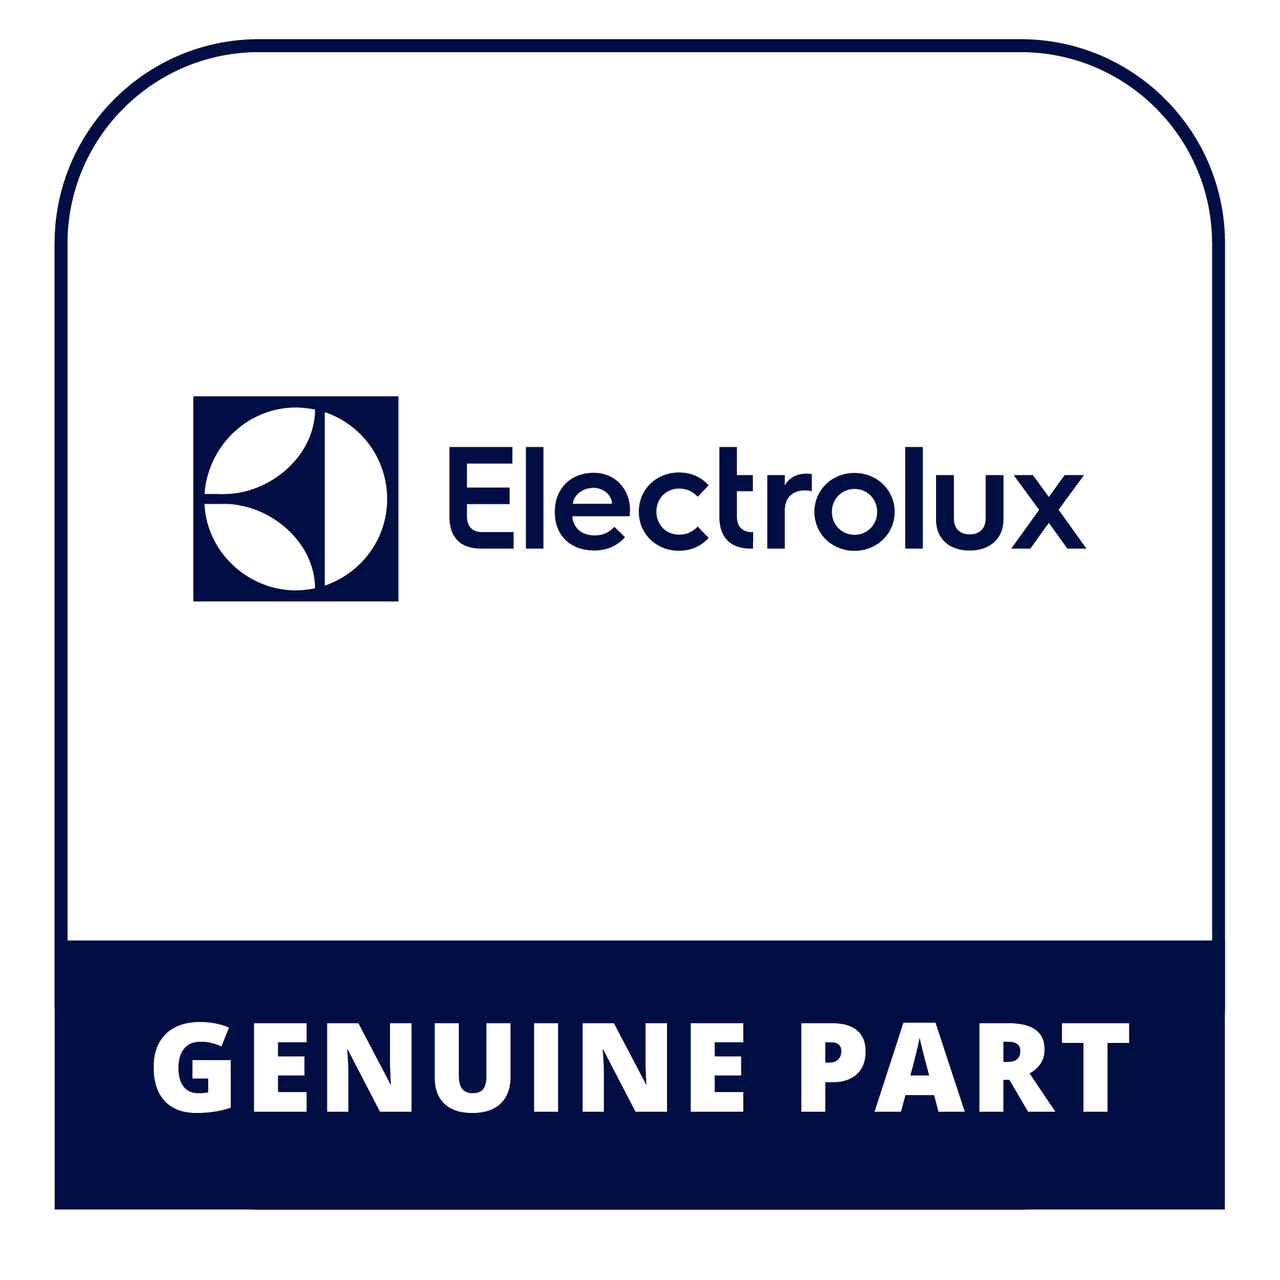 Frigidaire - Electrolux 5304531604 Tubing - Genuine Electrolux Part